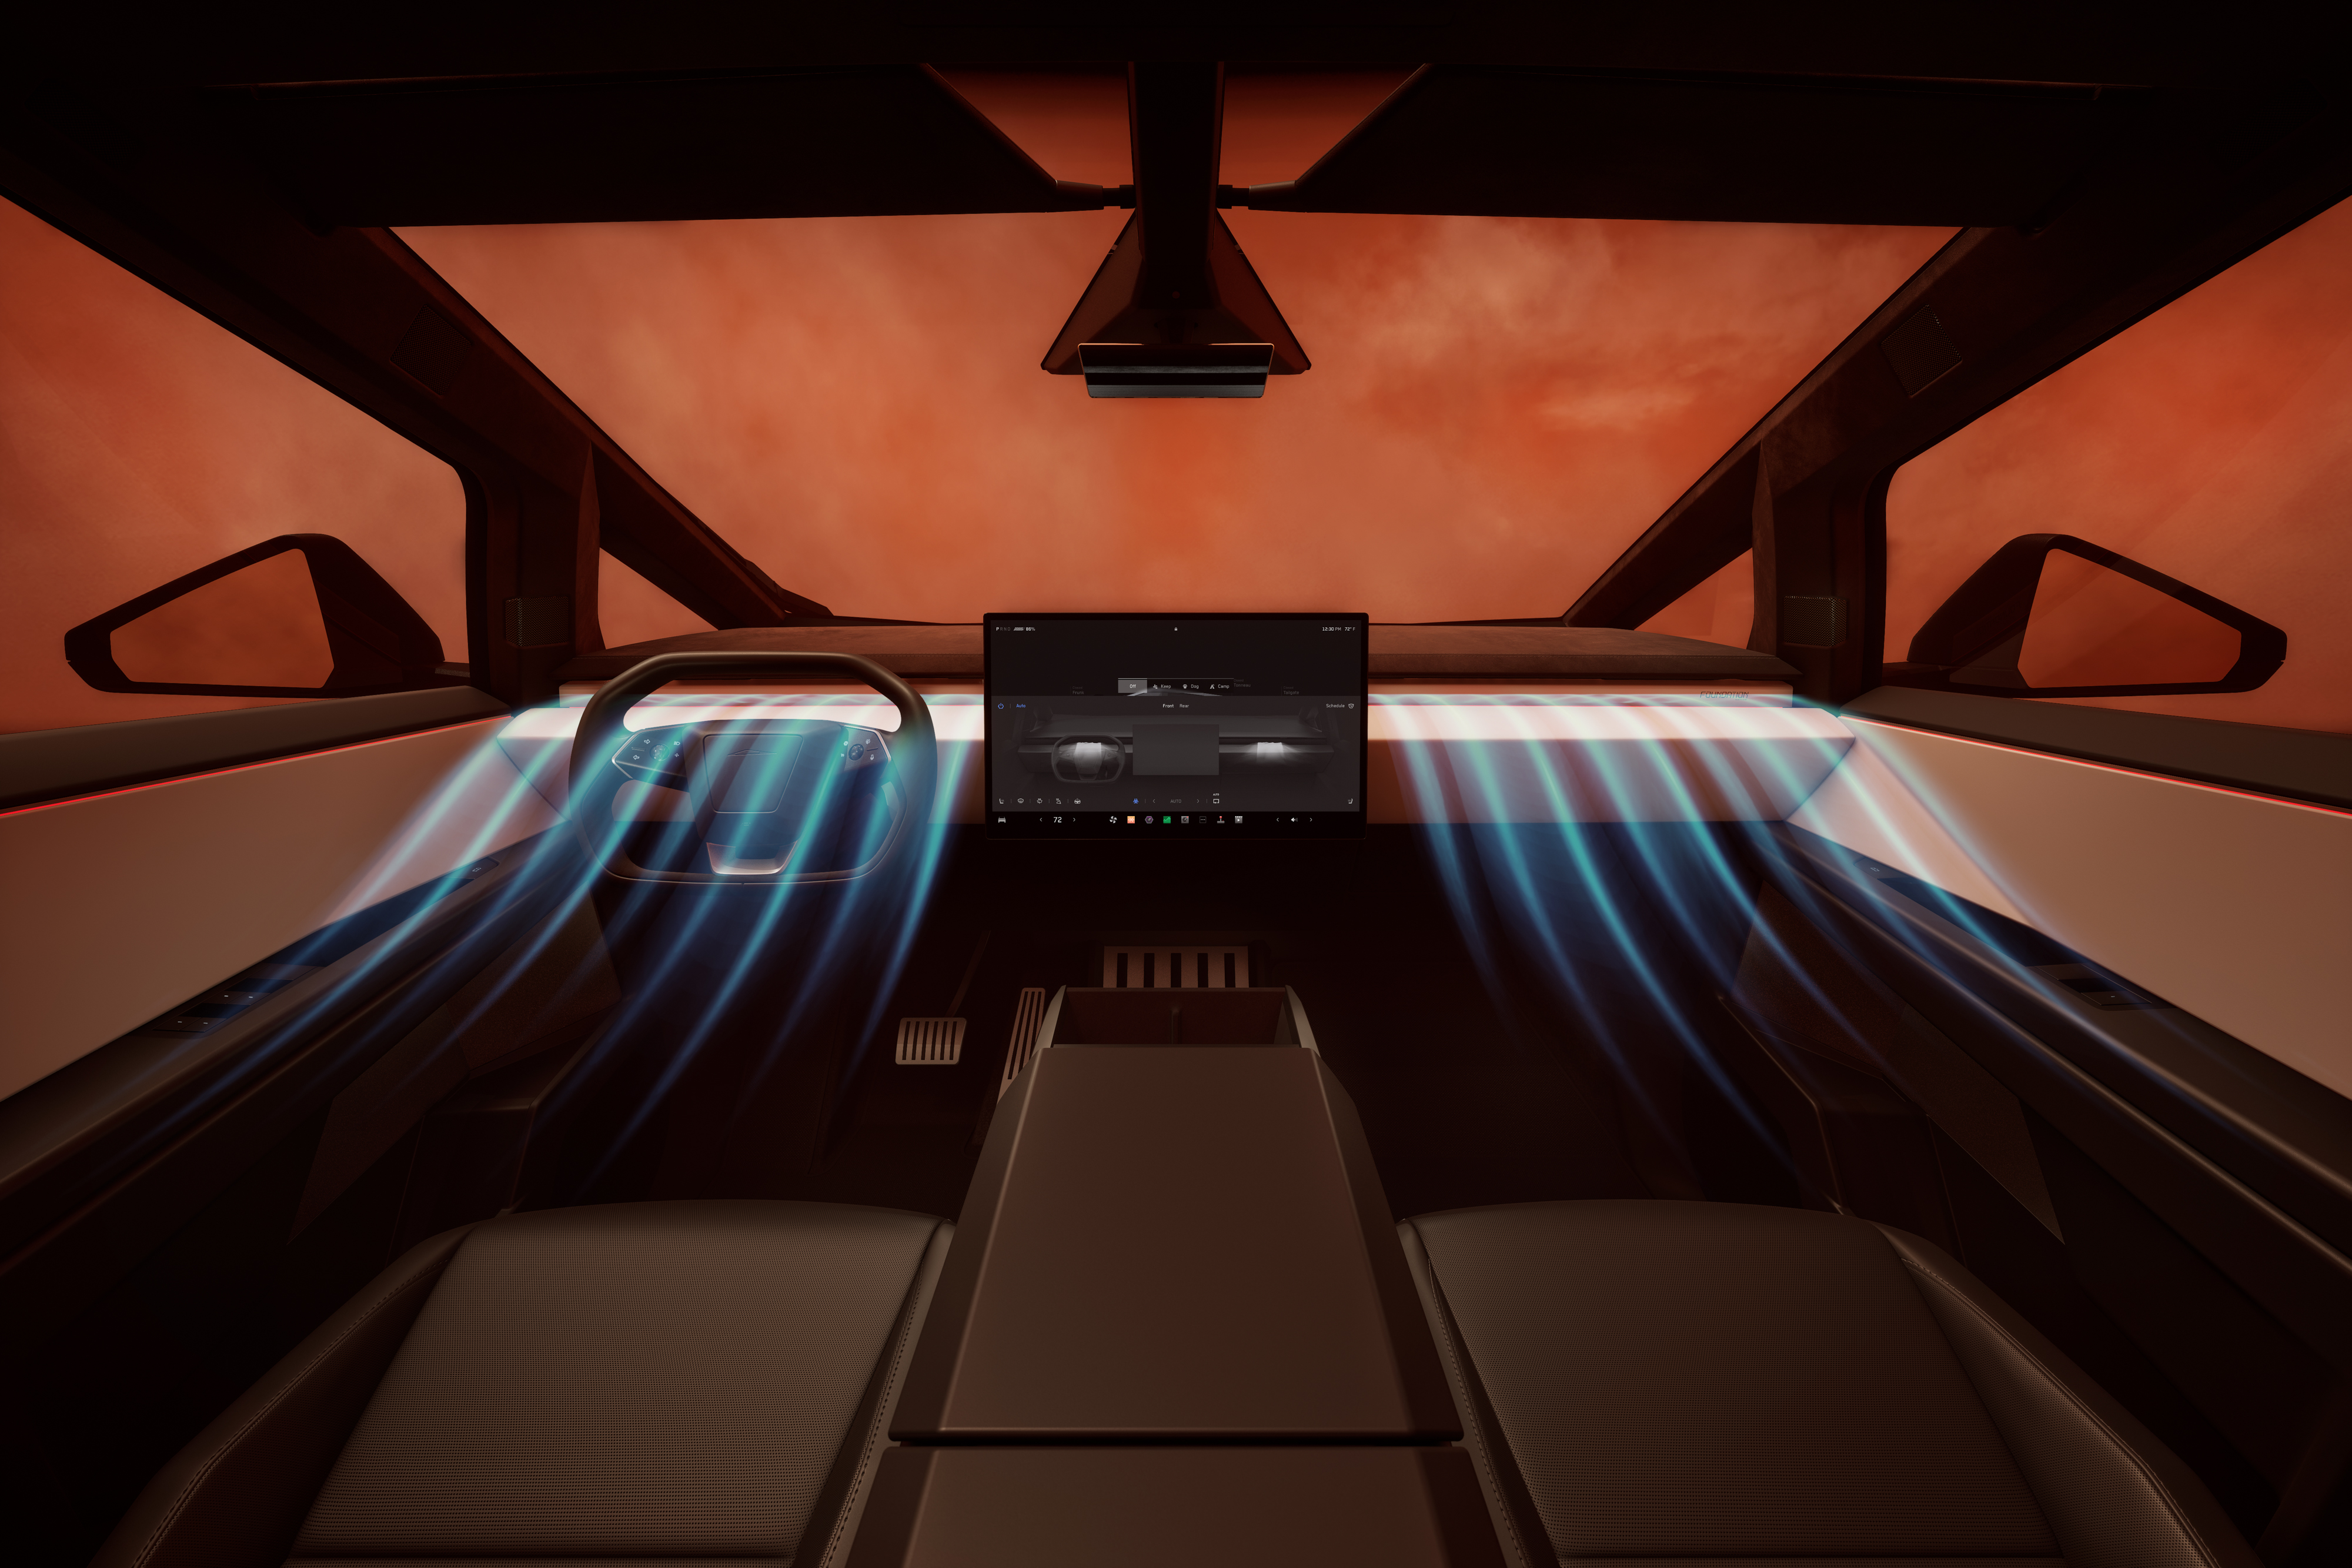 The interior of the Tesla Cybertruck. Image: Tesla